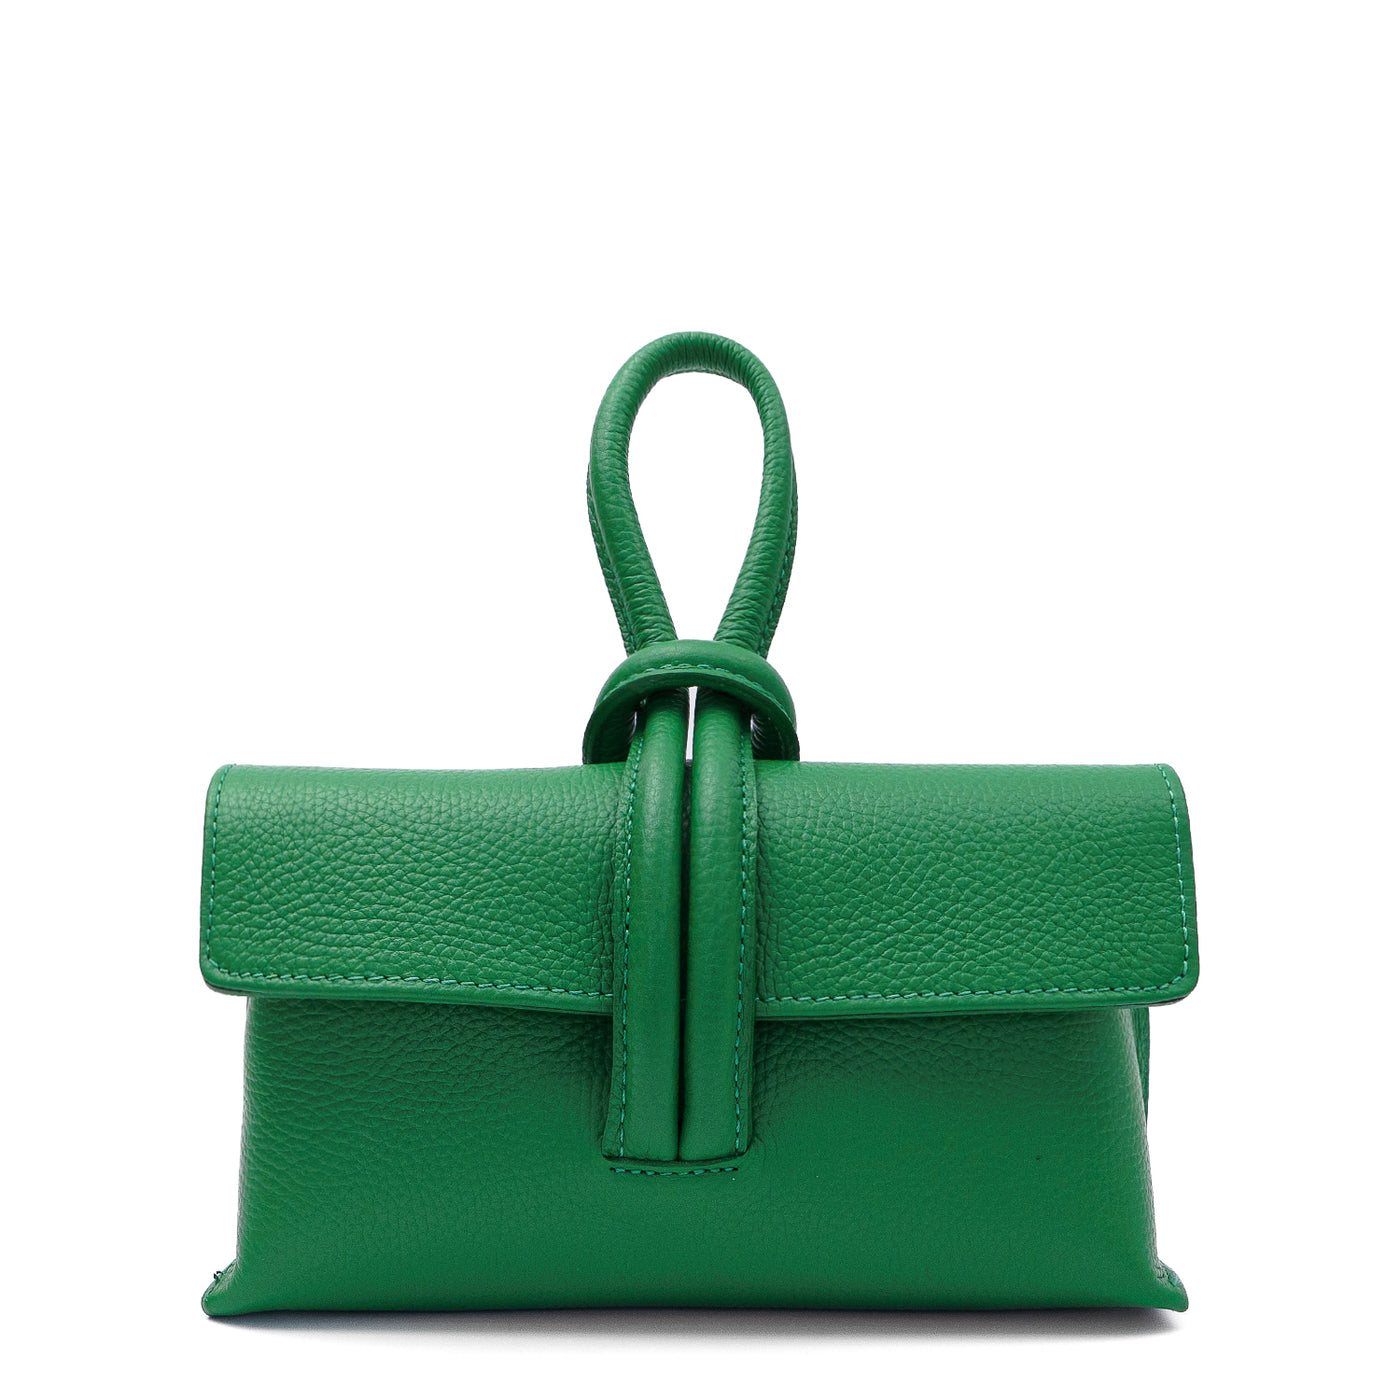 Leather bag "Barletta", Green